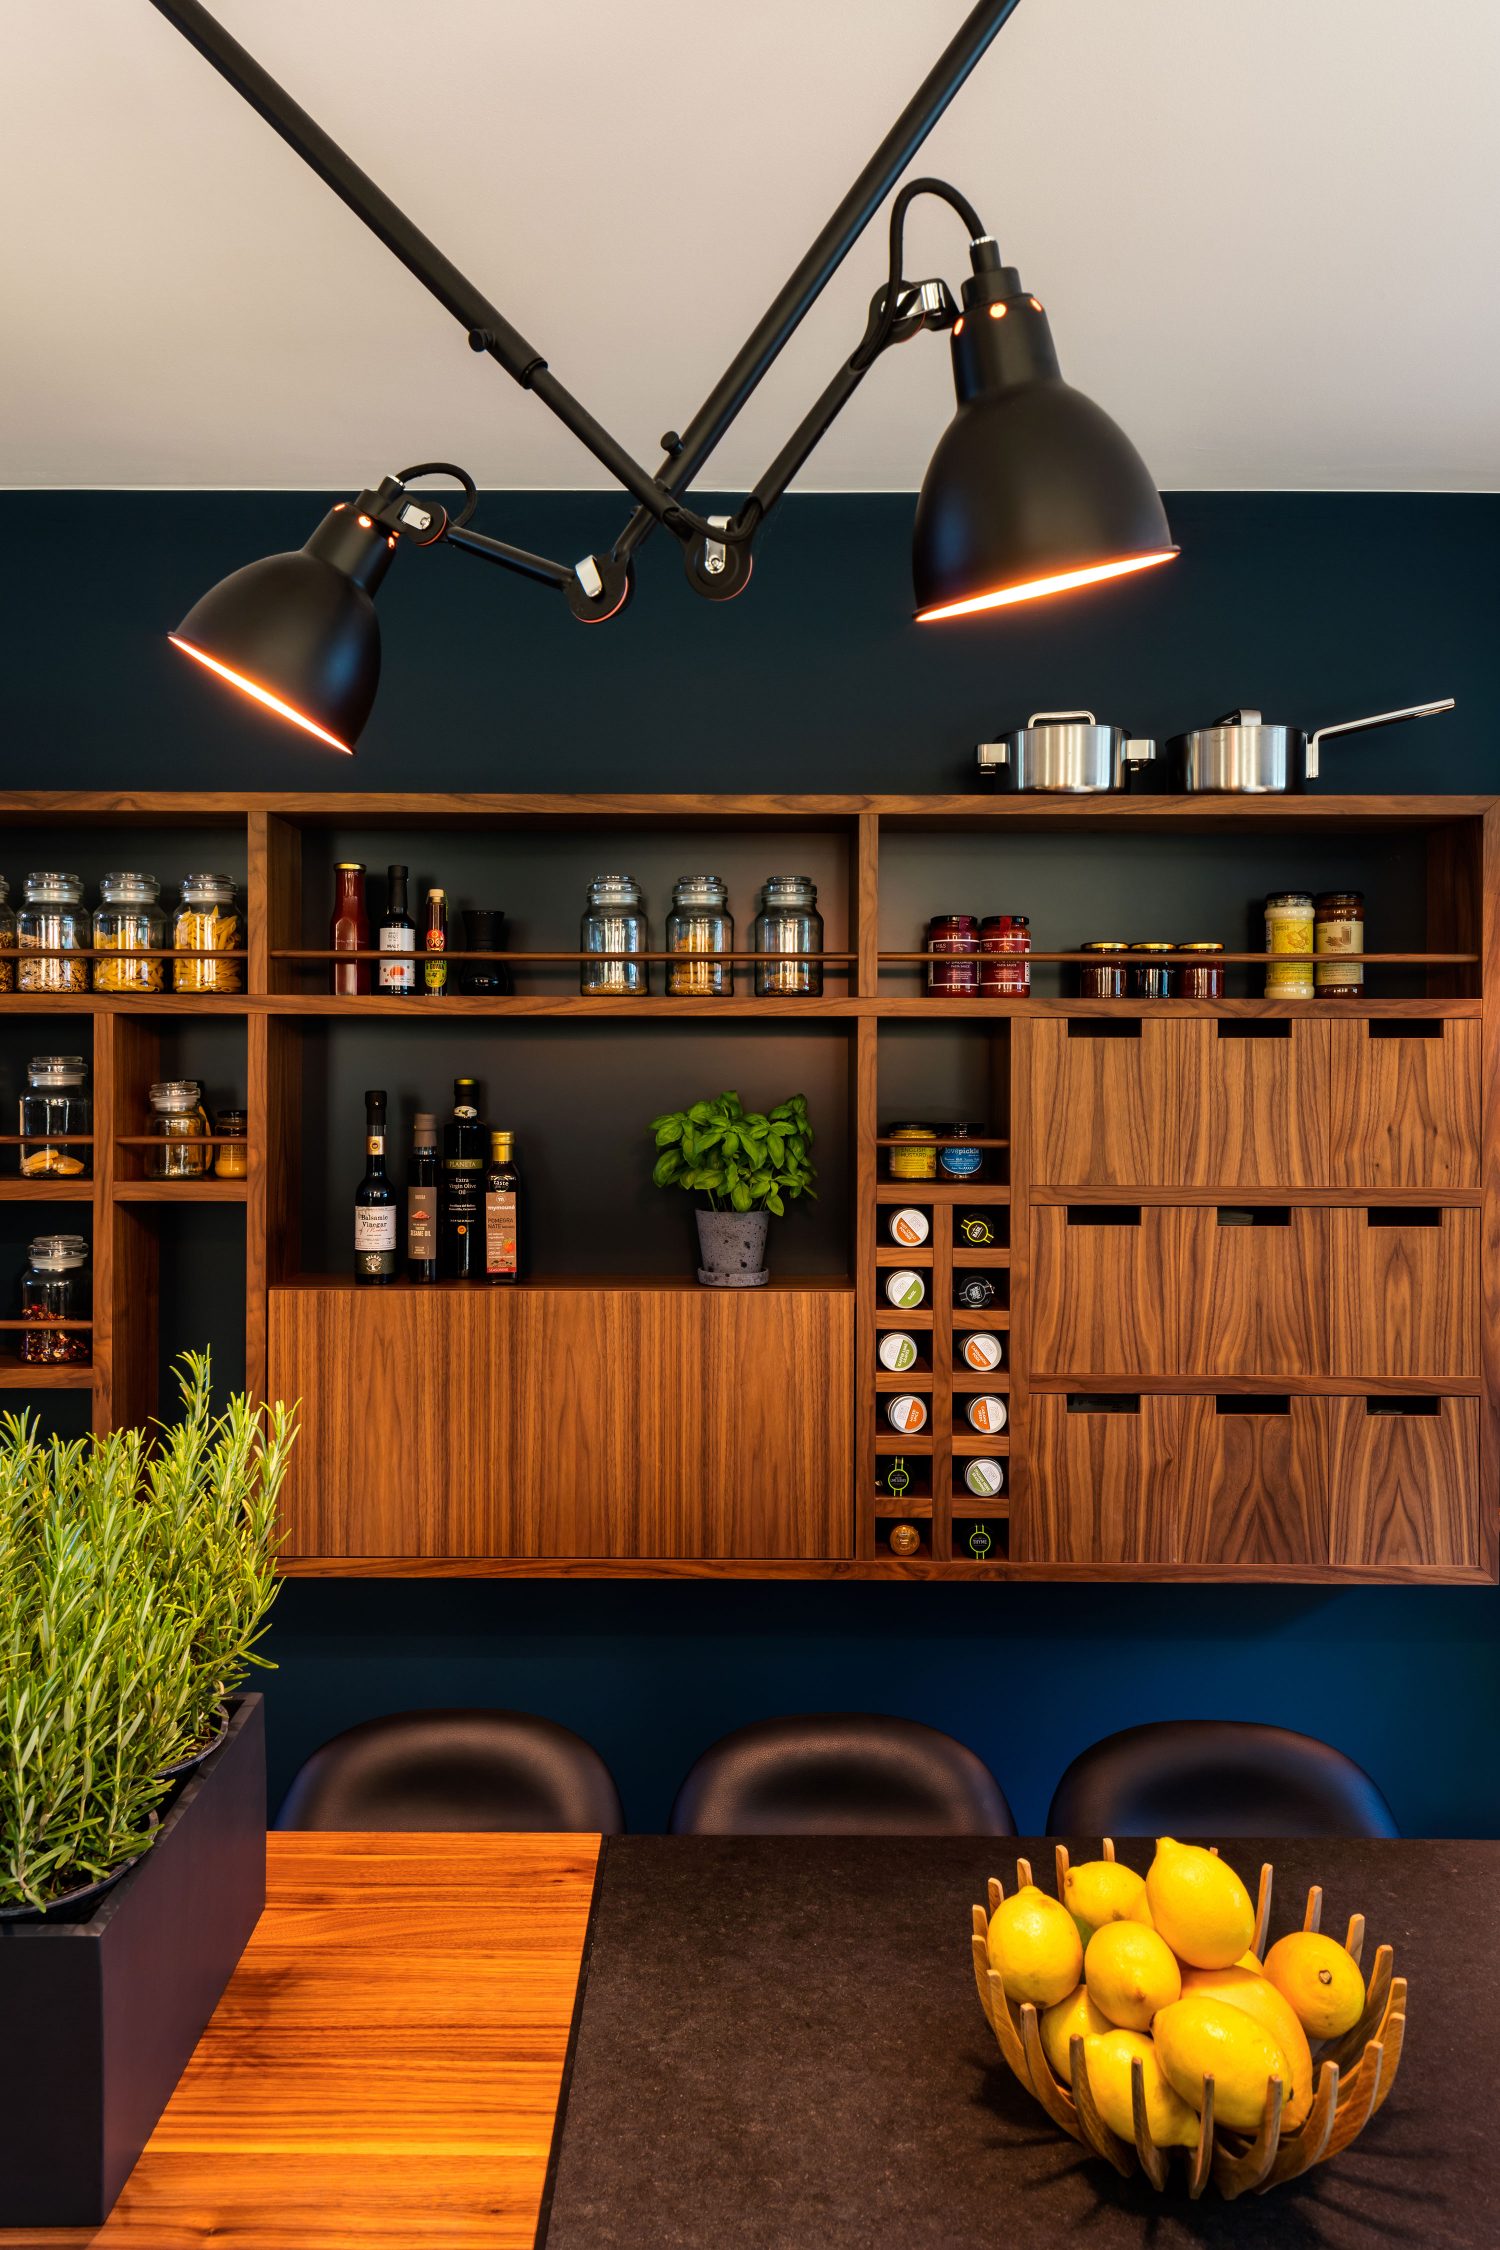 Mellow Yellow Islington interior design project, Daniel Hopwood. Dark, stylish kitchen design, with wood accents